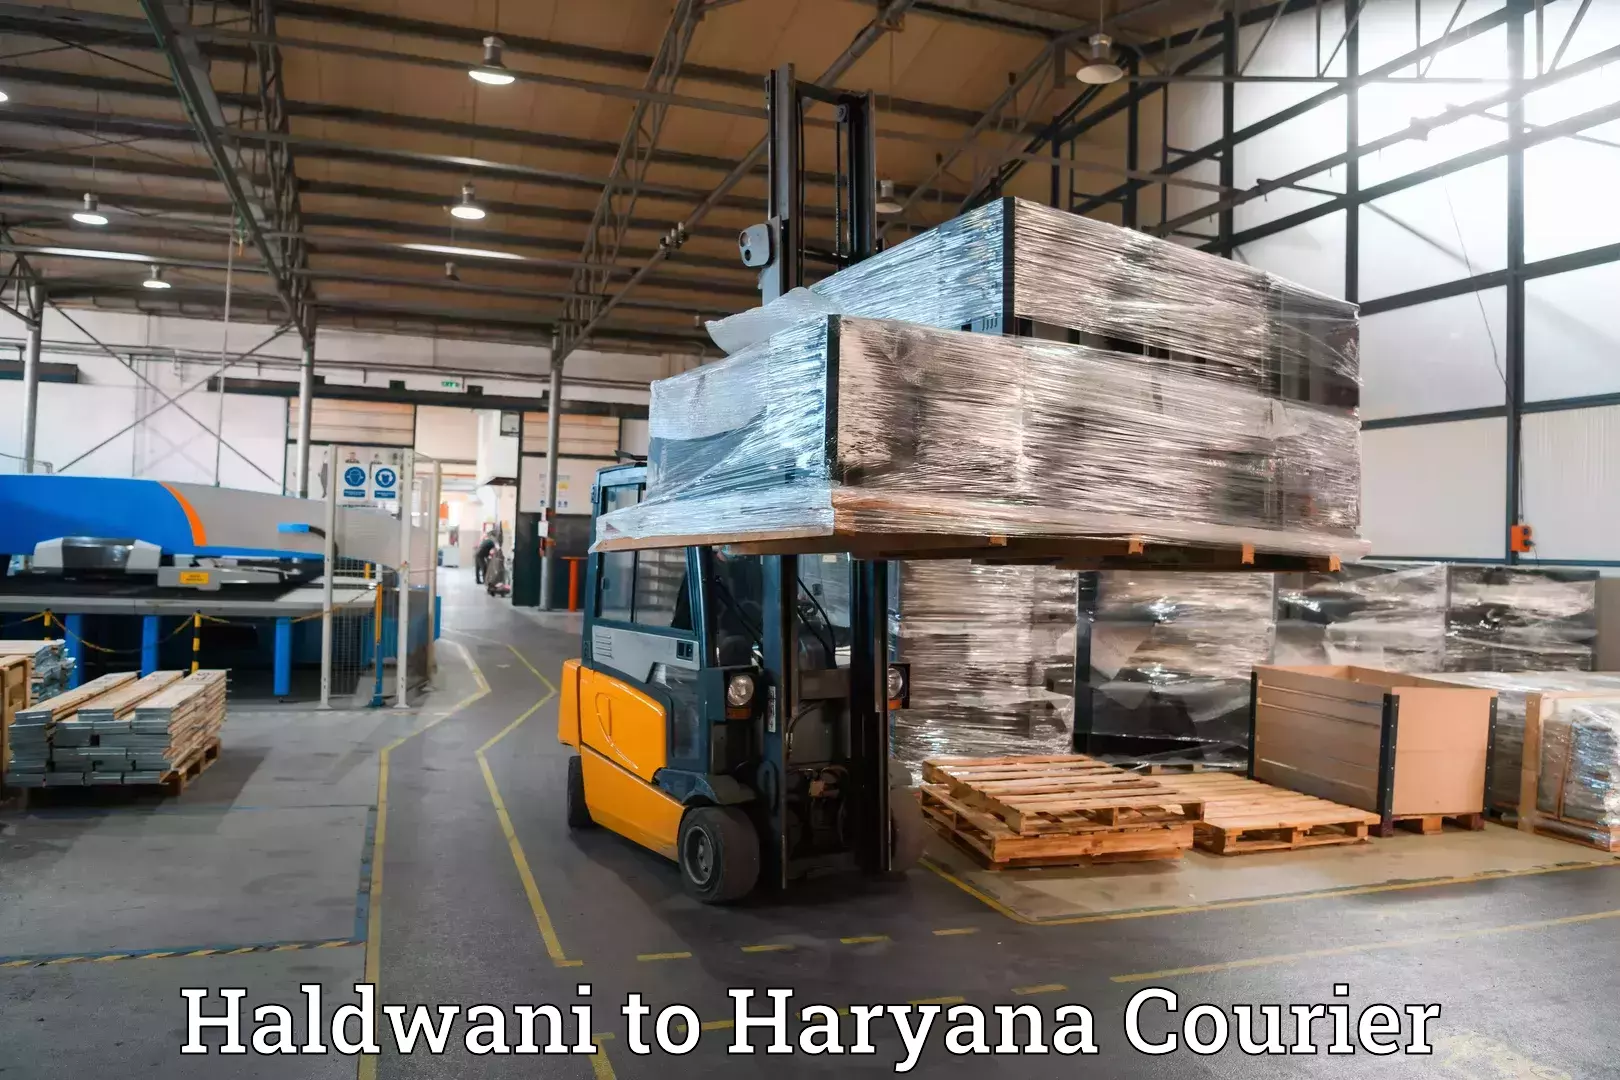 Holiday season luggage delivery Haldwani to Barwala